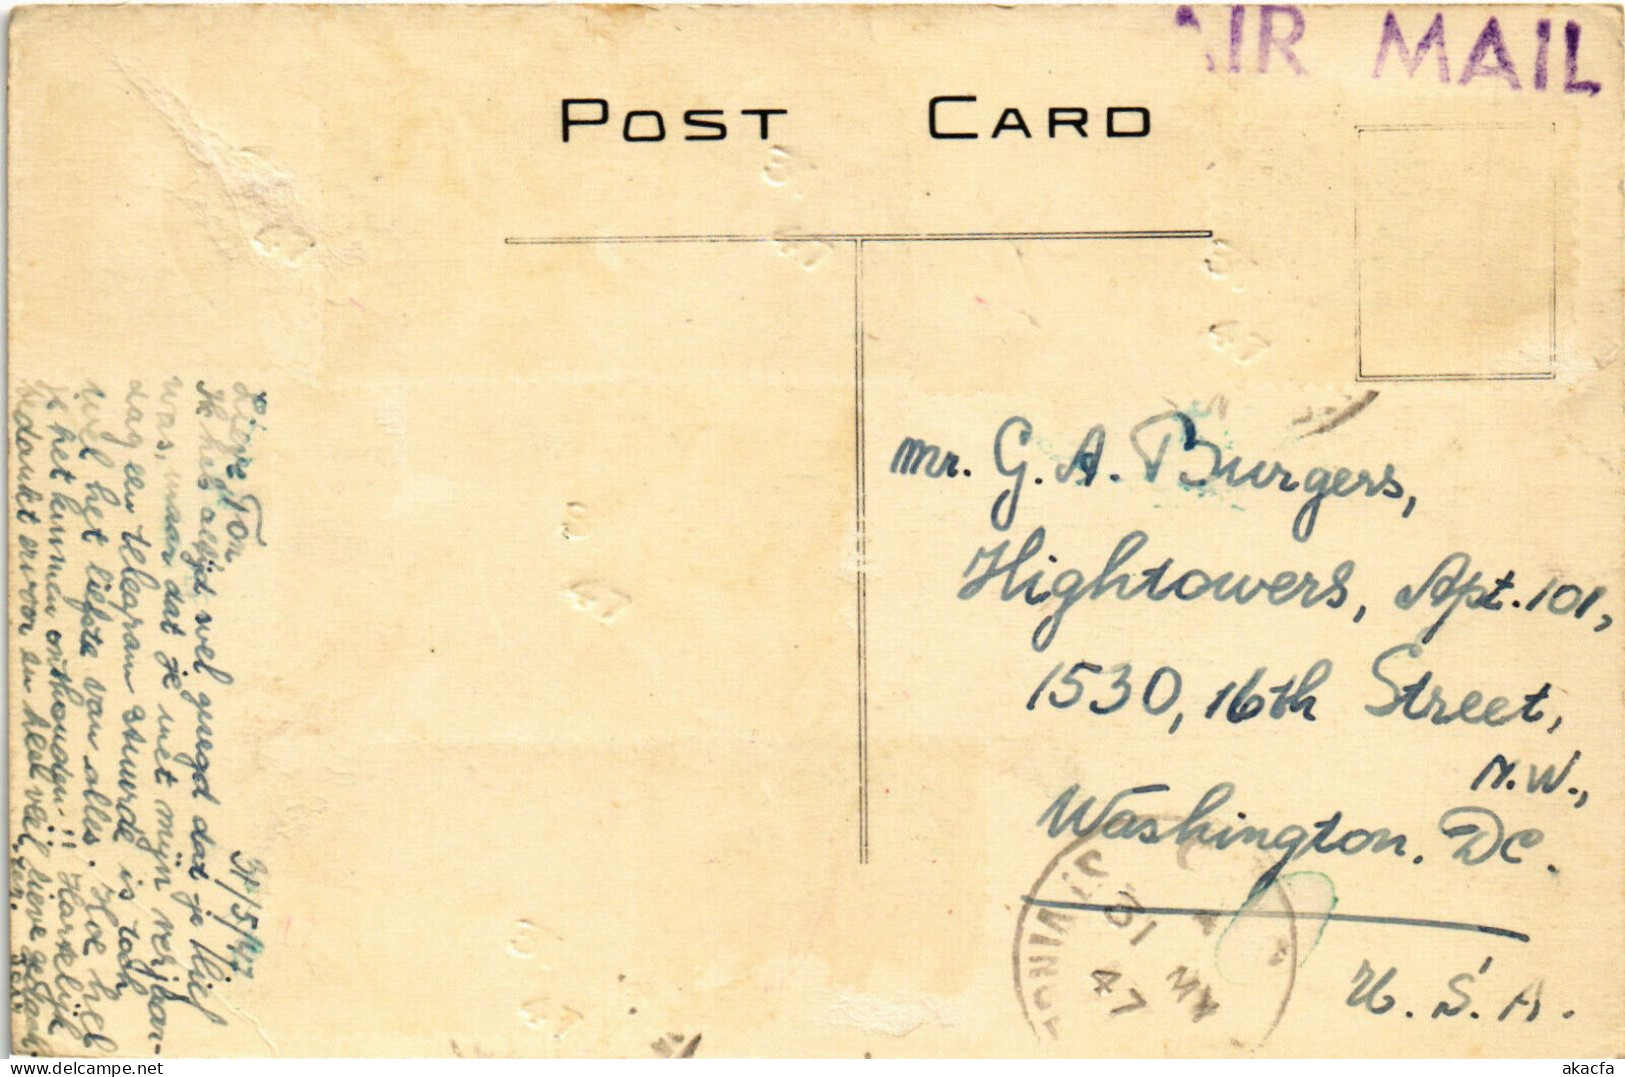 PC VIRGIN ISLANDS ST. VINCENT KINGSTOWN GENERAL VIEW Vintage Postcard (b52252) - Isole Vergine Britanniche